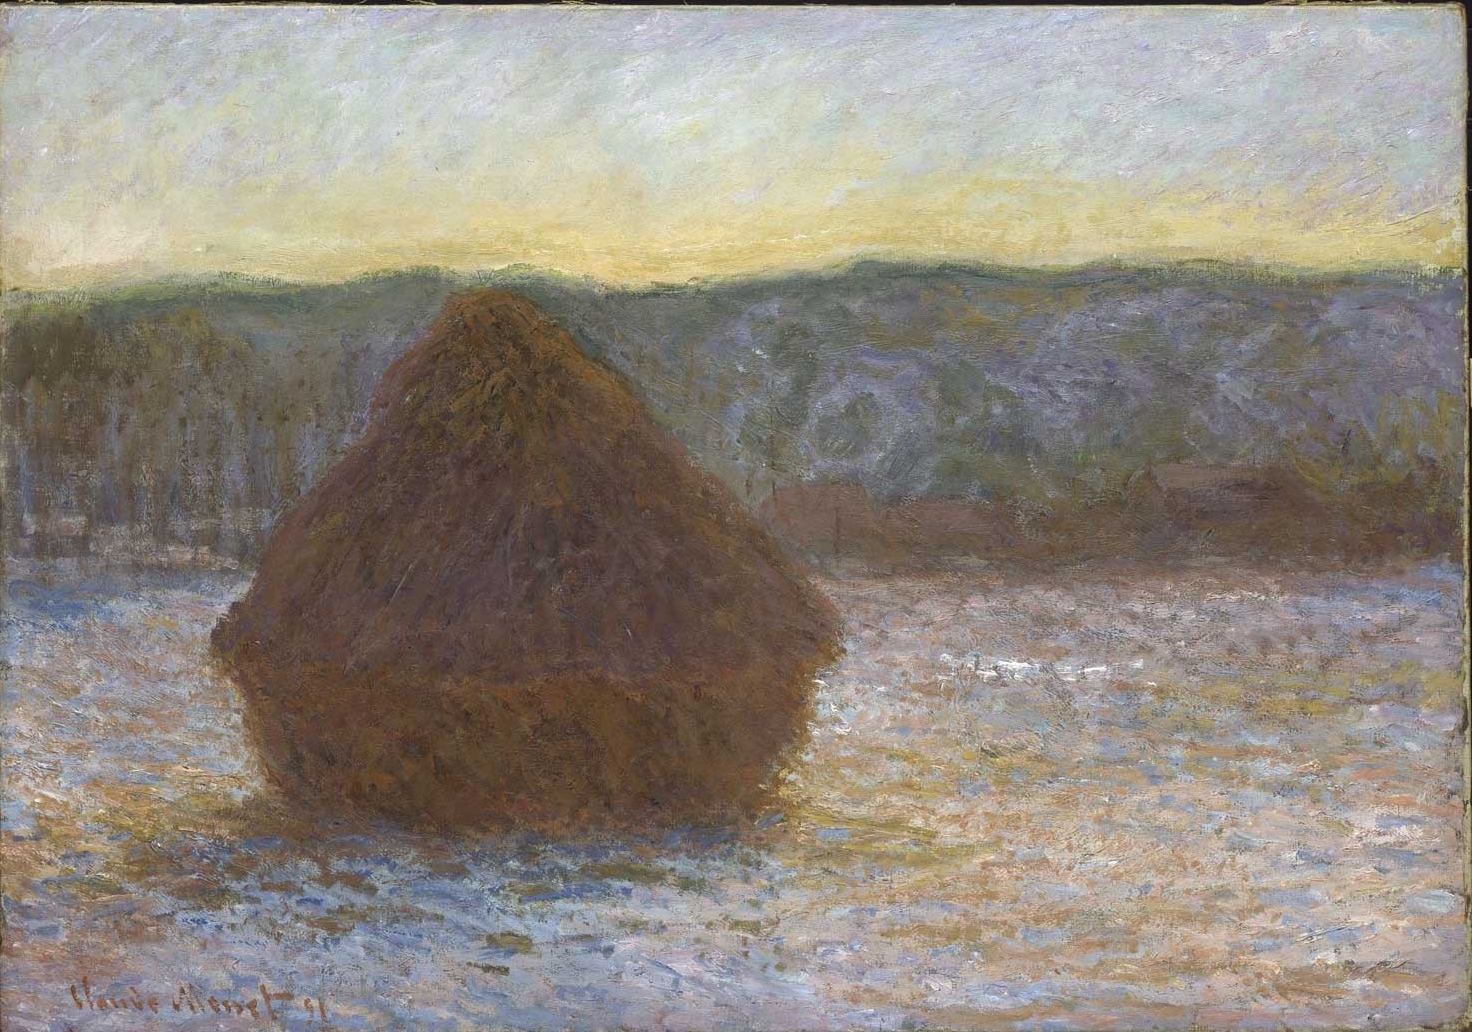 Claude+Monet-1840-1926 (709).jpg